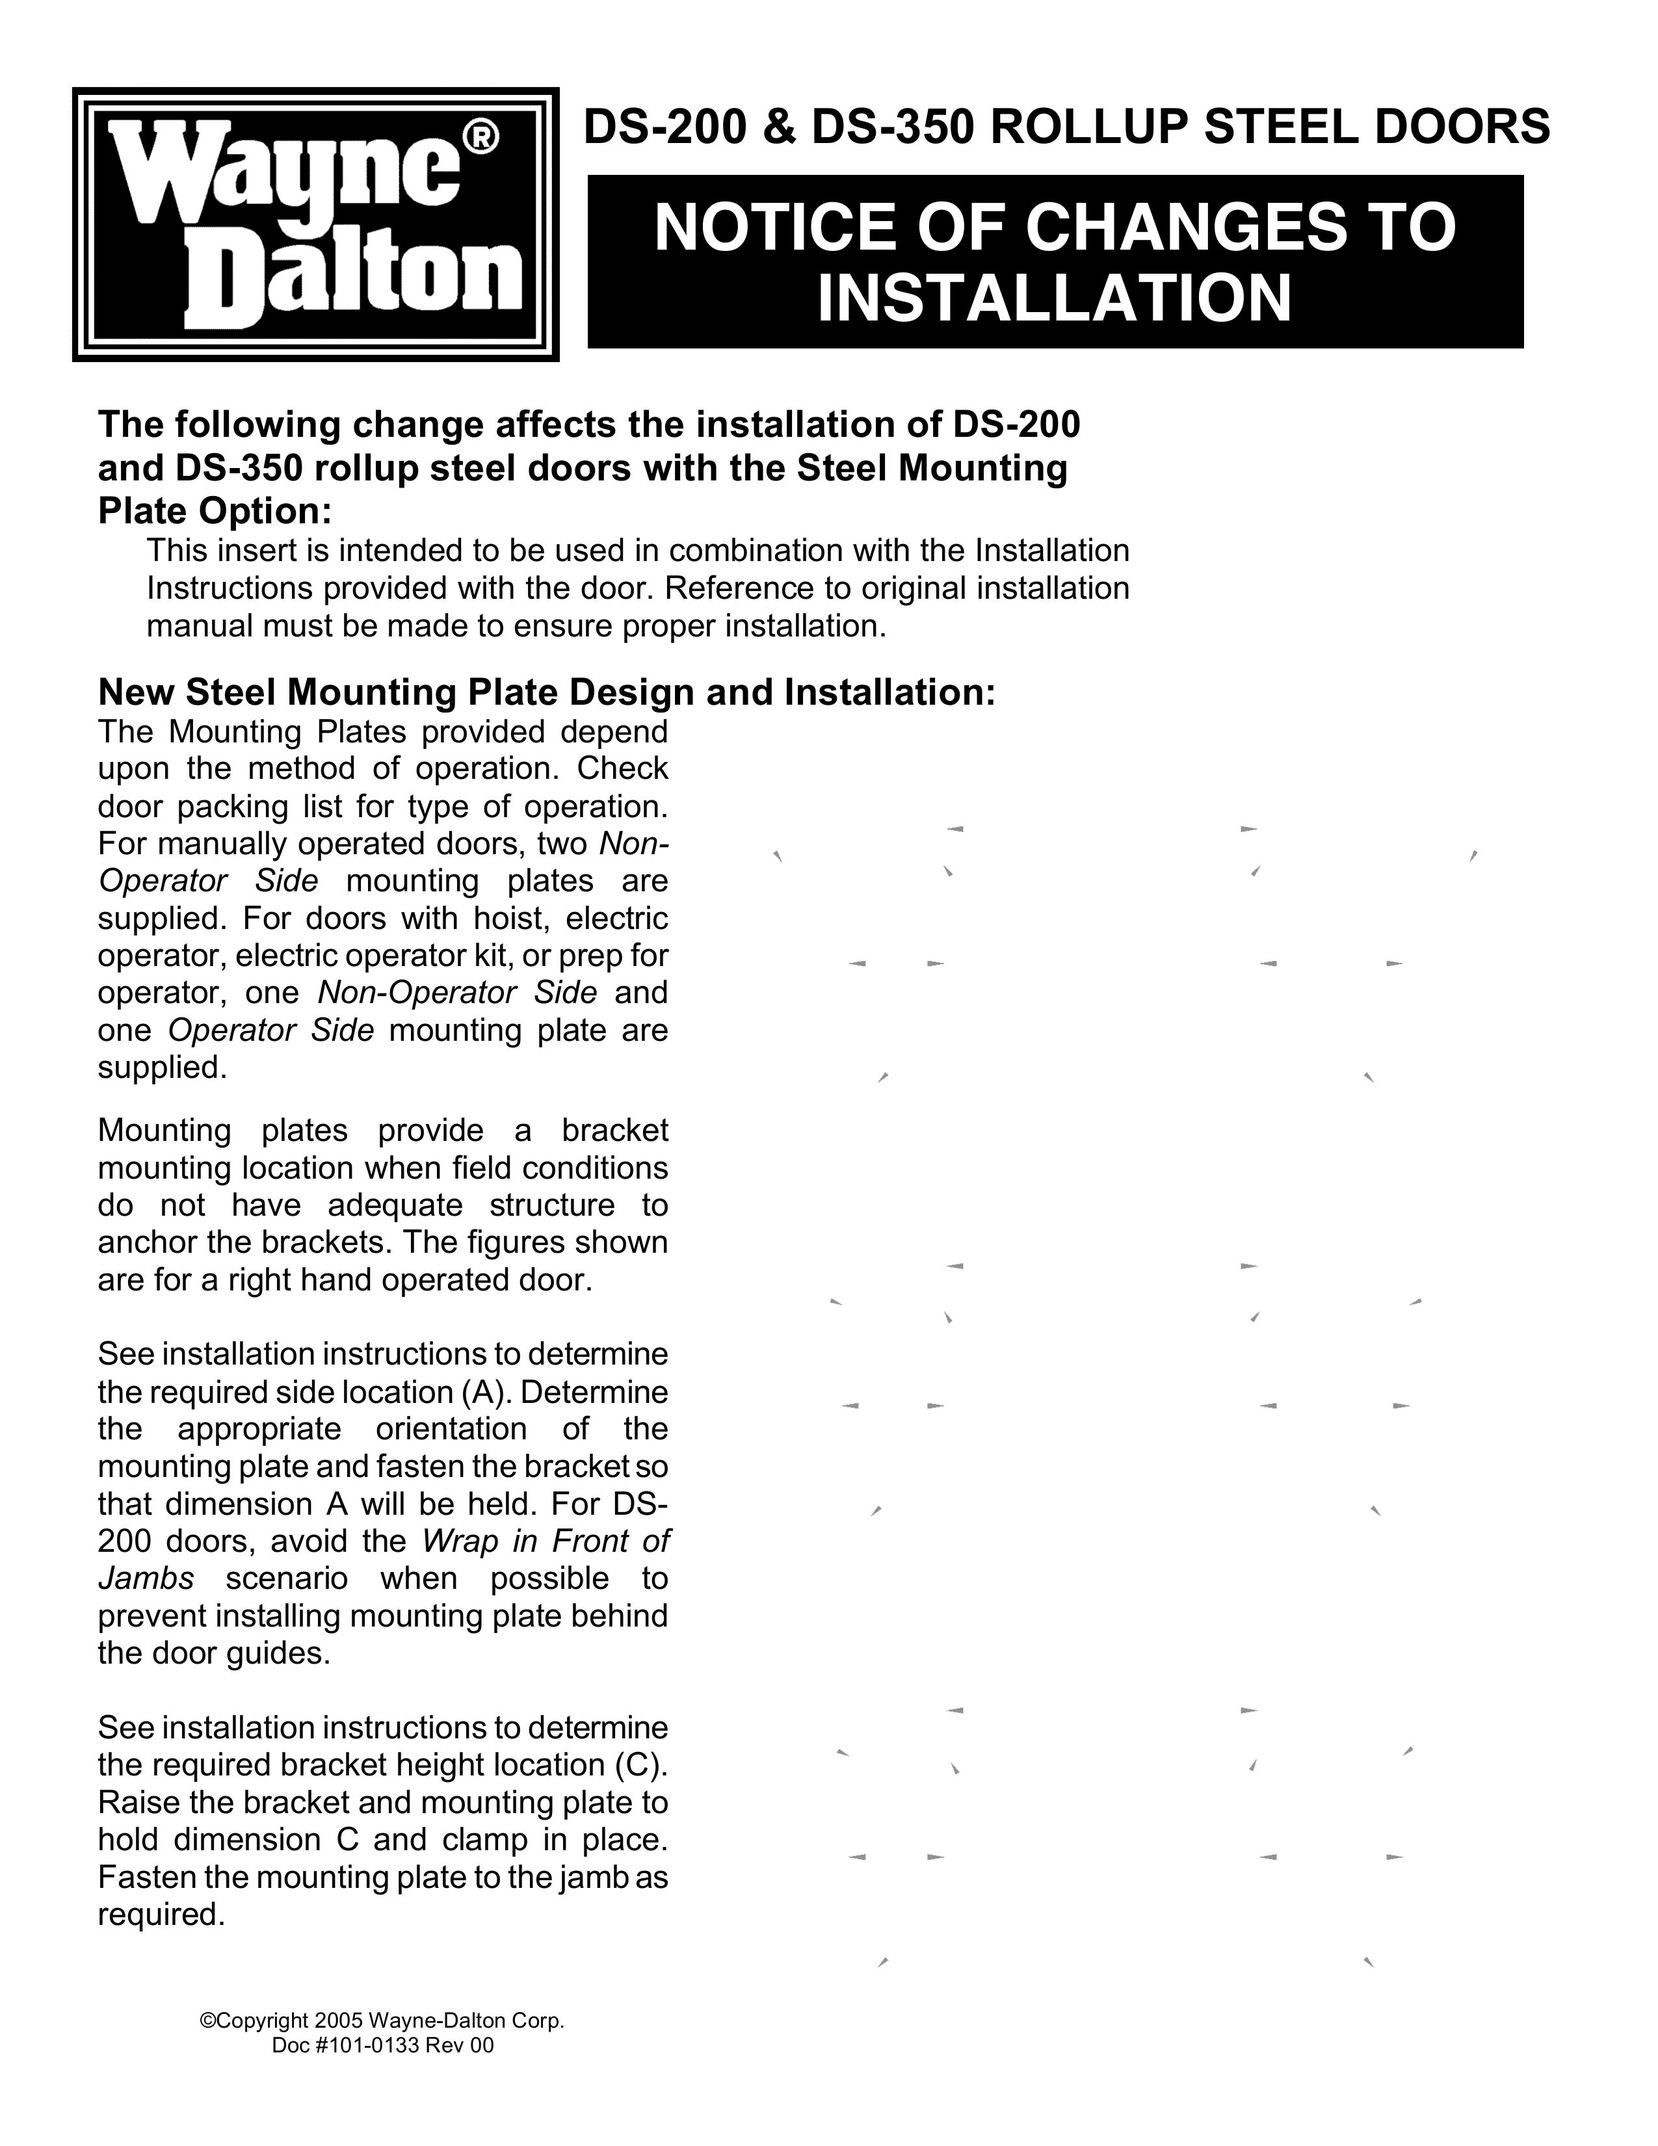 Wayne-Dalton DS-200 Door User Manual